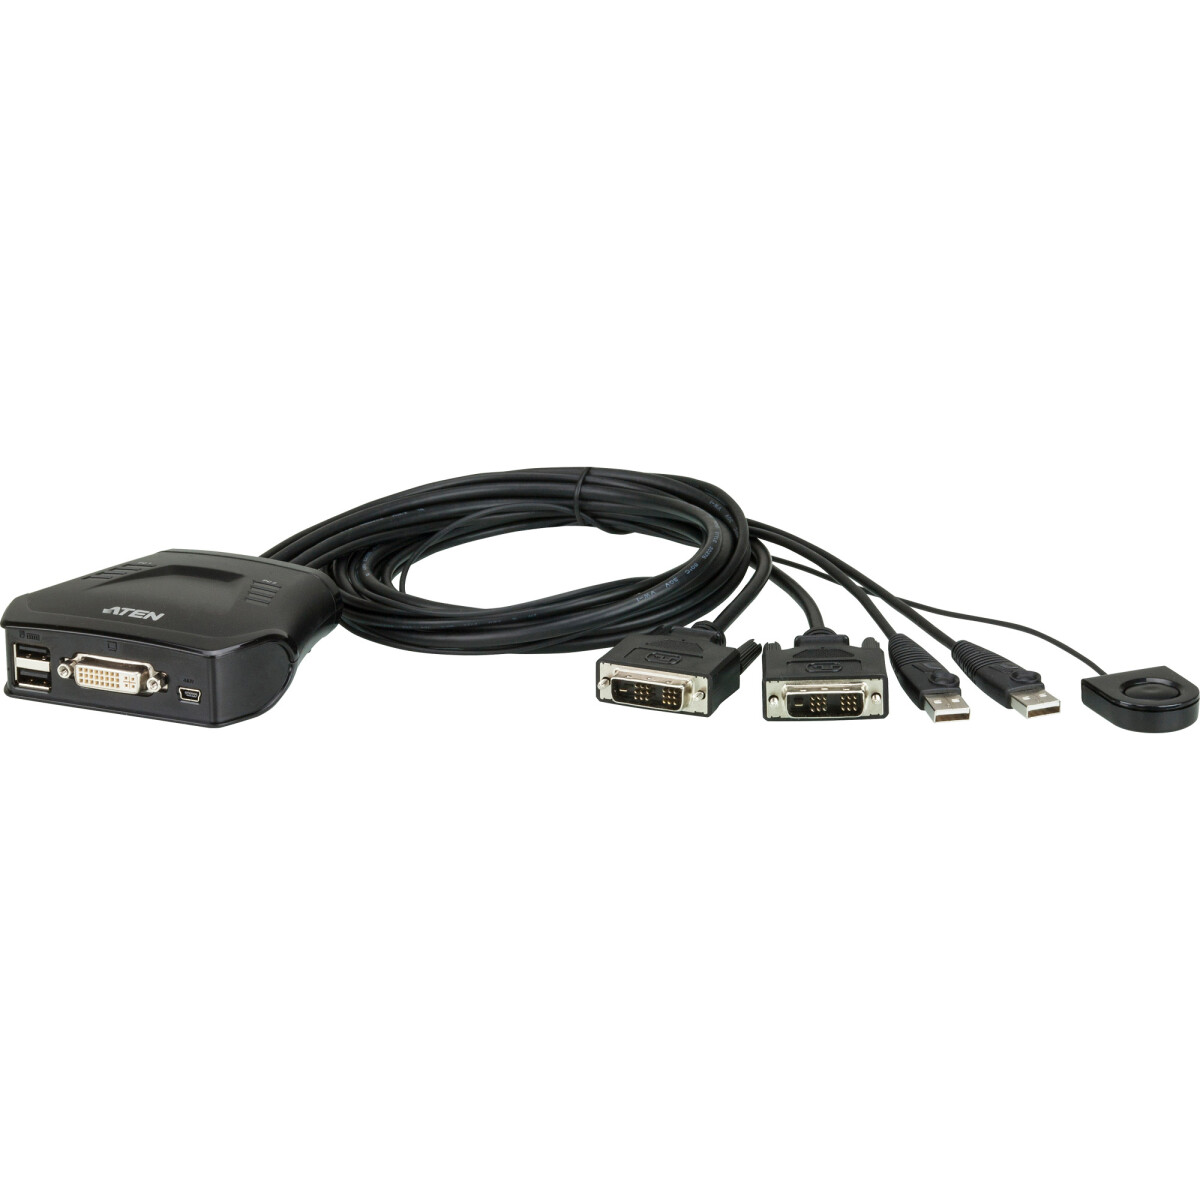 ATEN CS22D KVM Switch, 2-port, USB, DVI, with cable remote